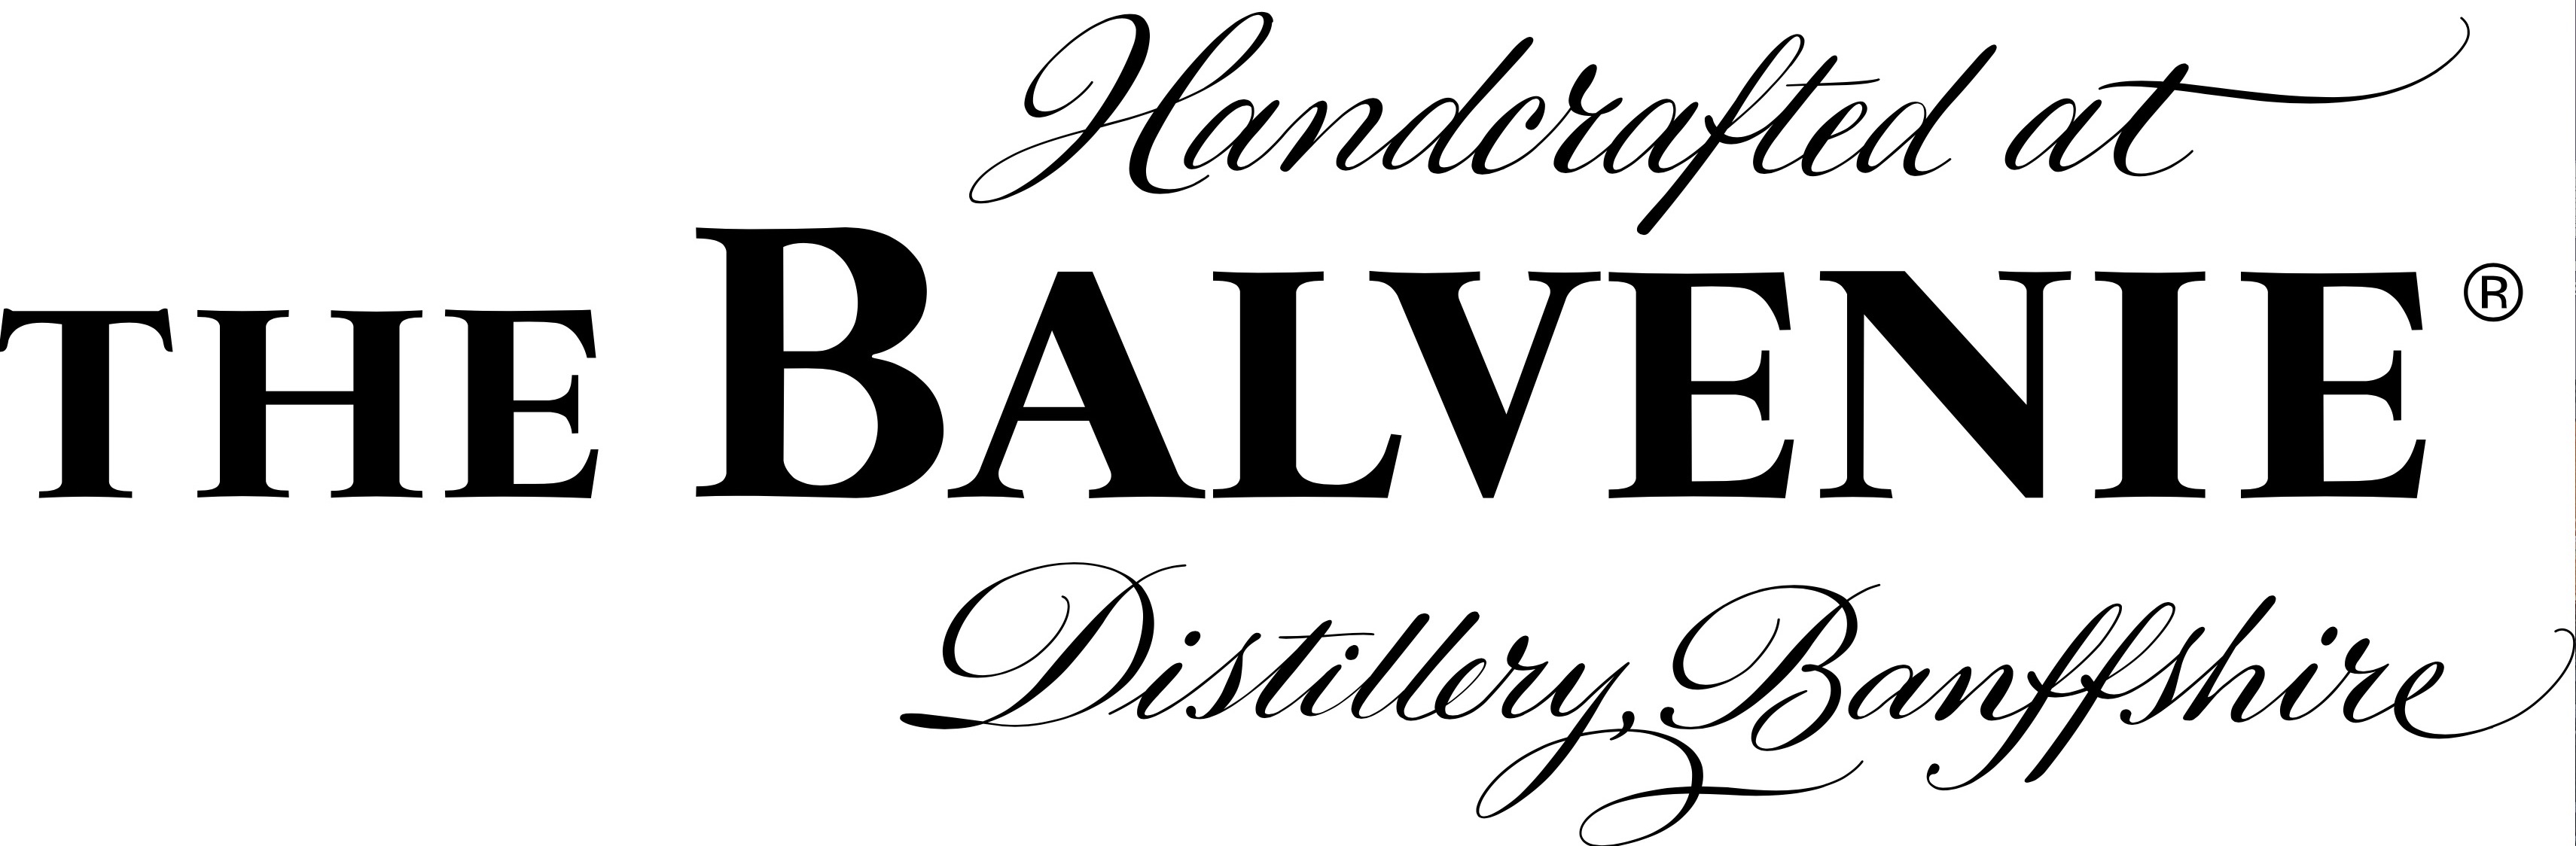 The Balvenie Distillery Company Ltd.